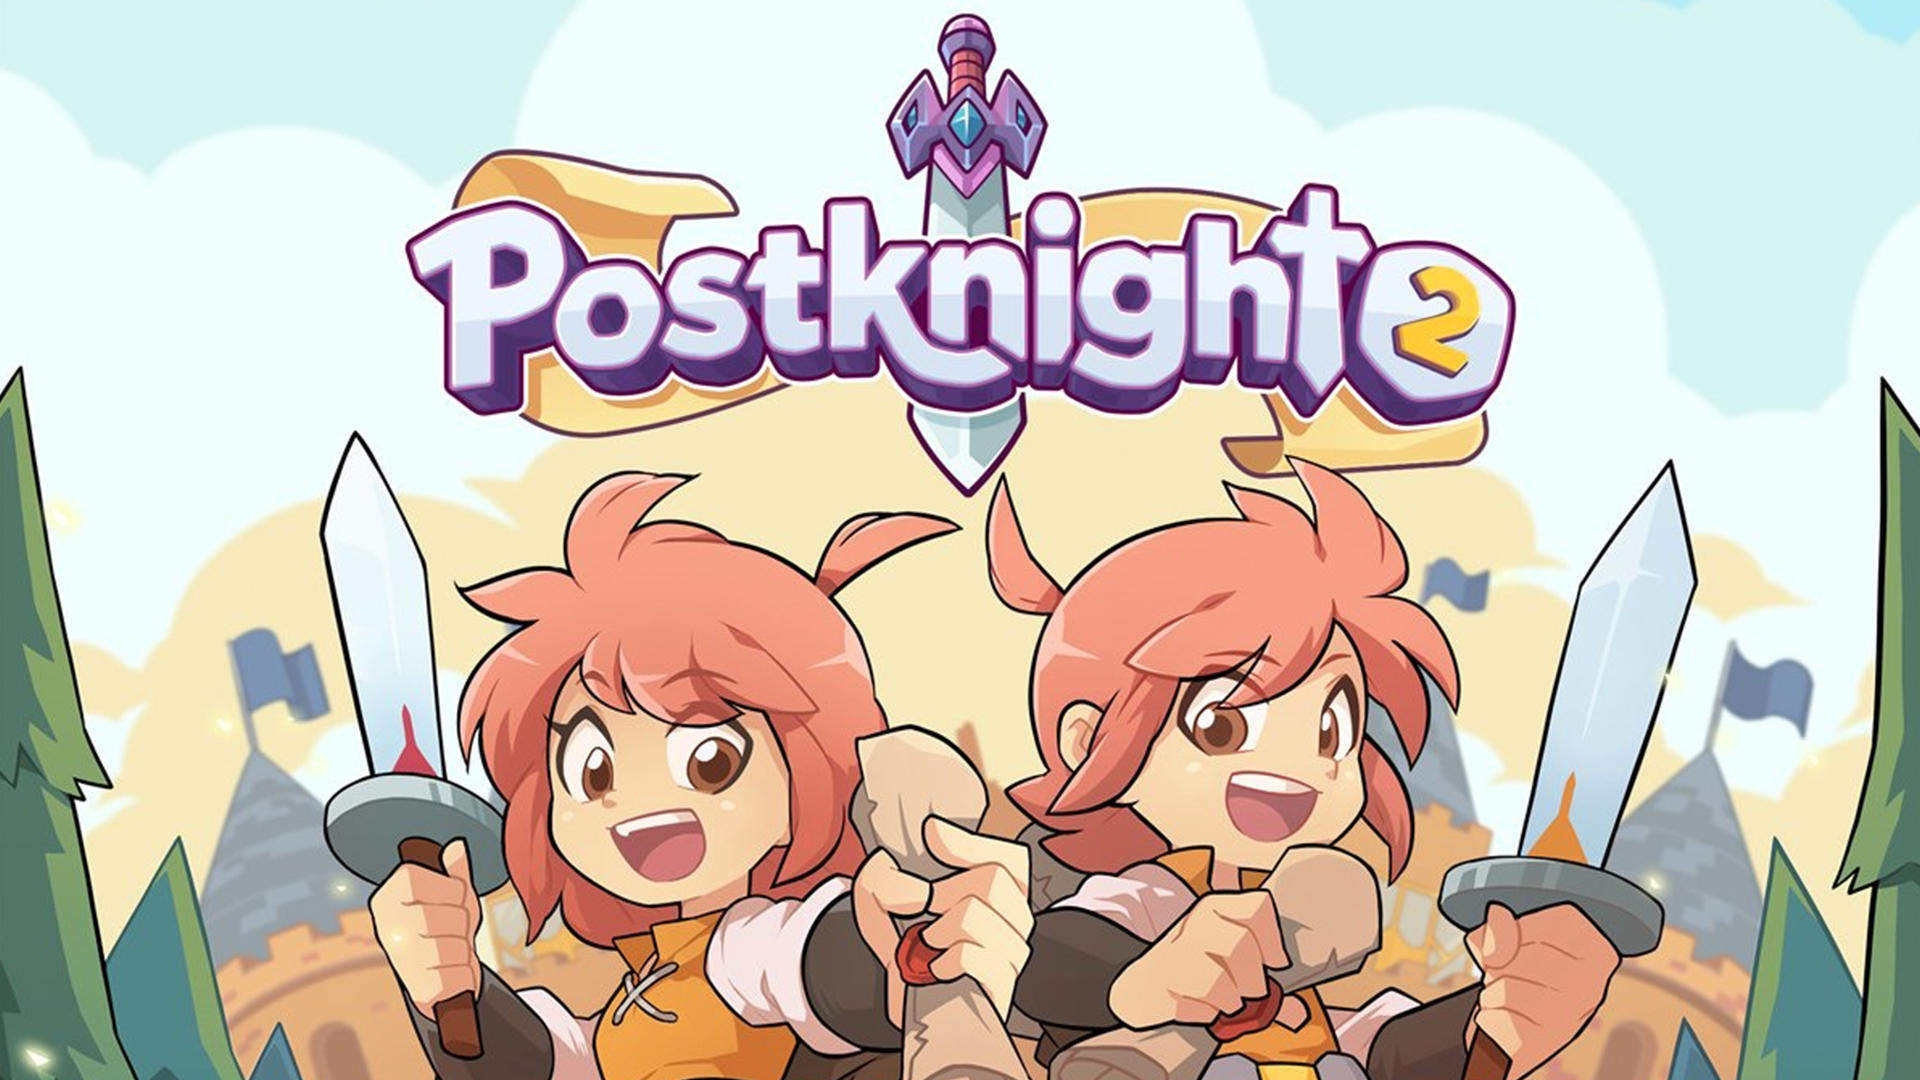 Postknight 2游戏截图